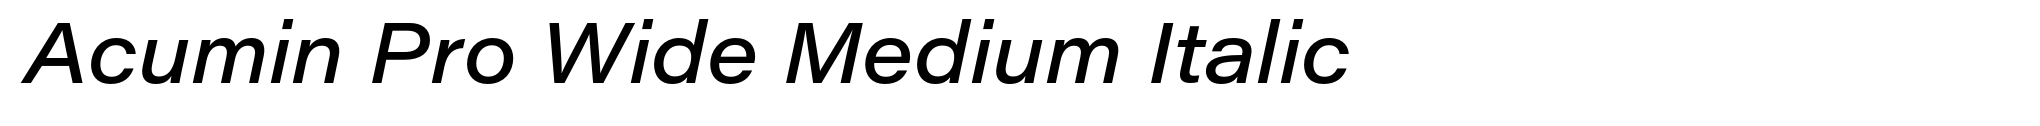 Acumin Pro Wide Medium Italic image